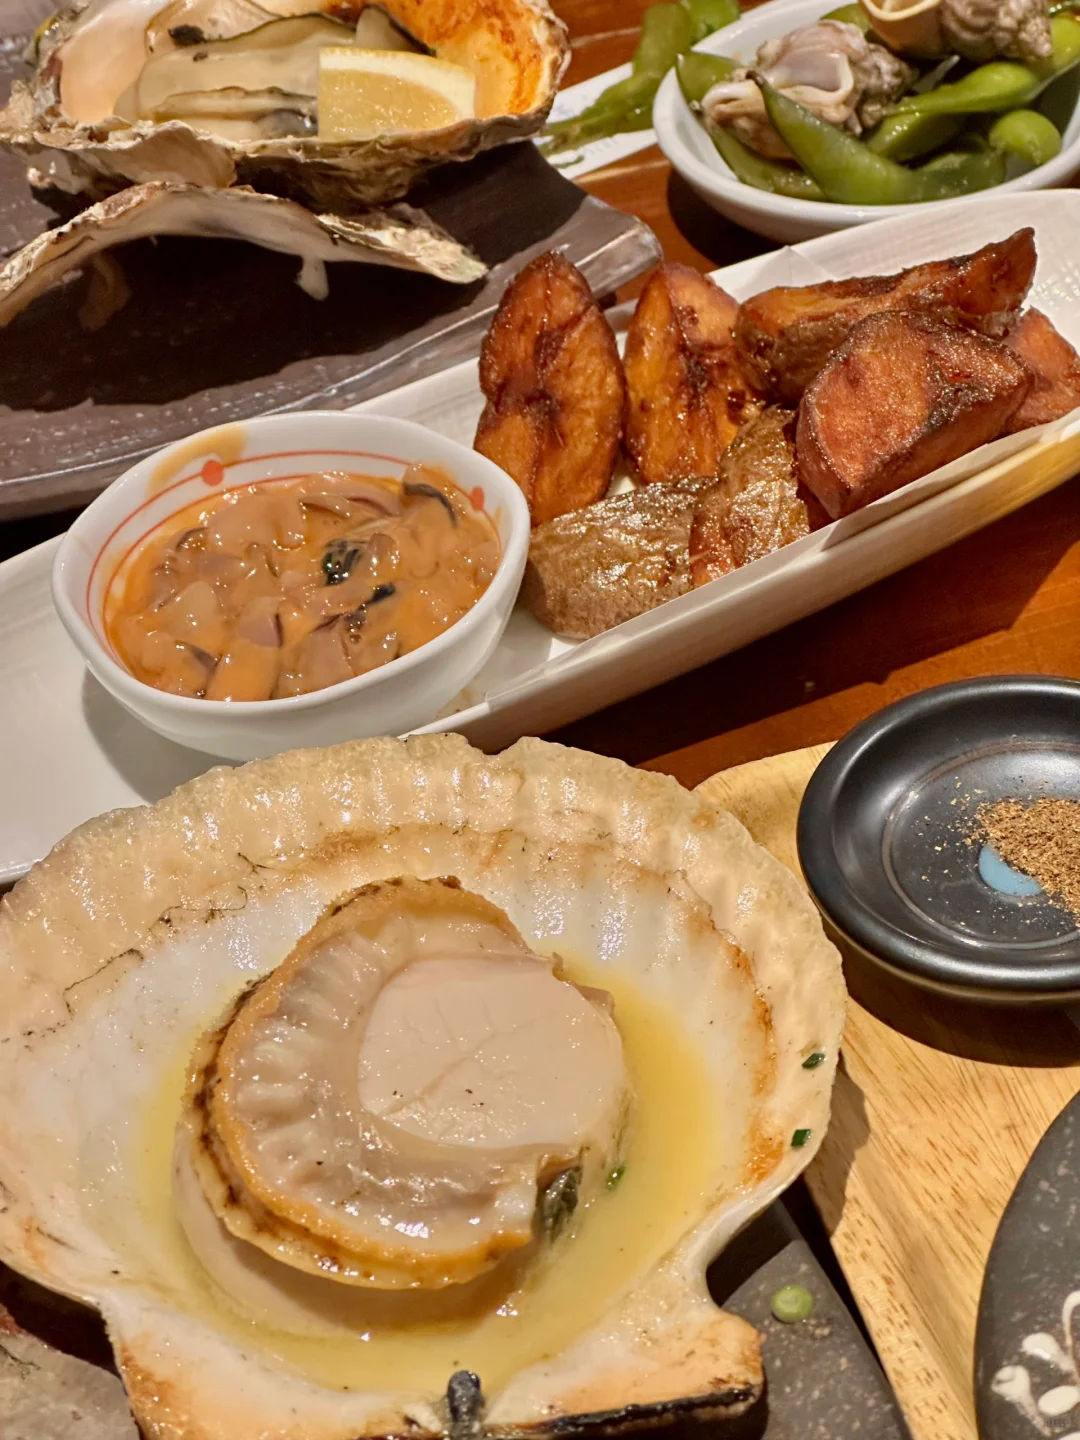 Sapporo/Hokkaido-Hokkaido Sapporo Shihachi Fish Shop Kita 24jo Branch, 2000 yen eel rice is really delicious